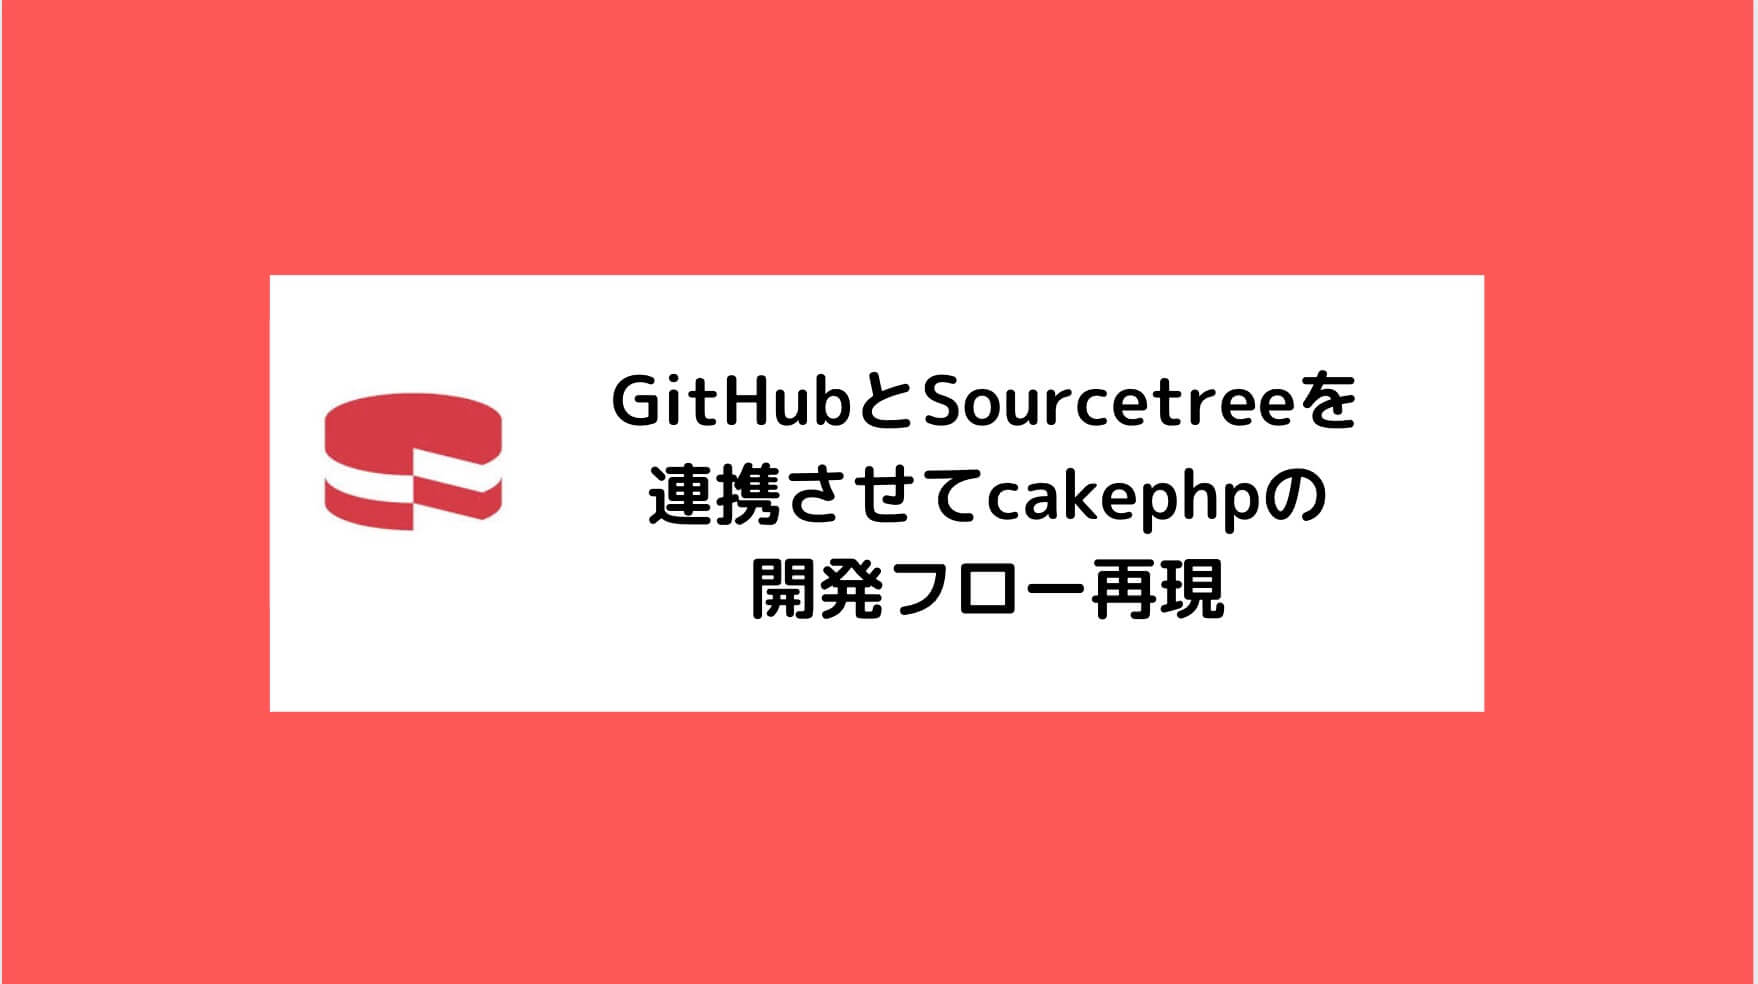 GitHubとSourcetreeを連携させてcakephpの開発フロー再現と書かれた画像